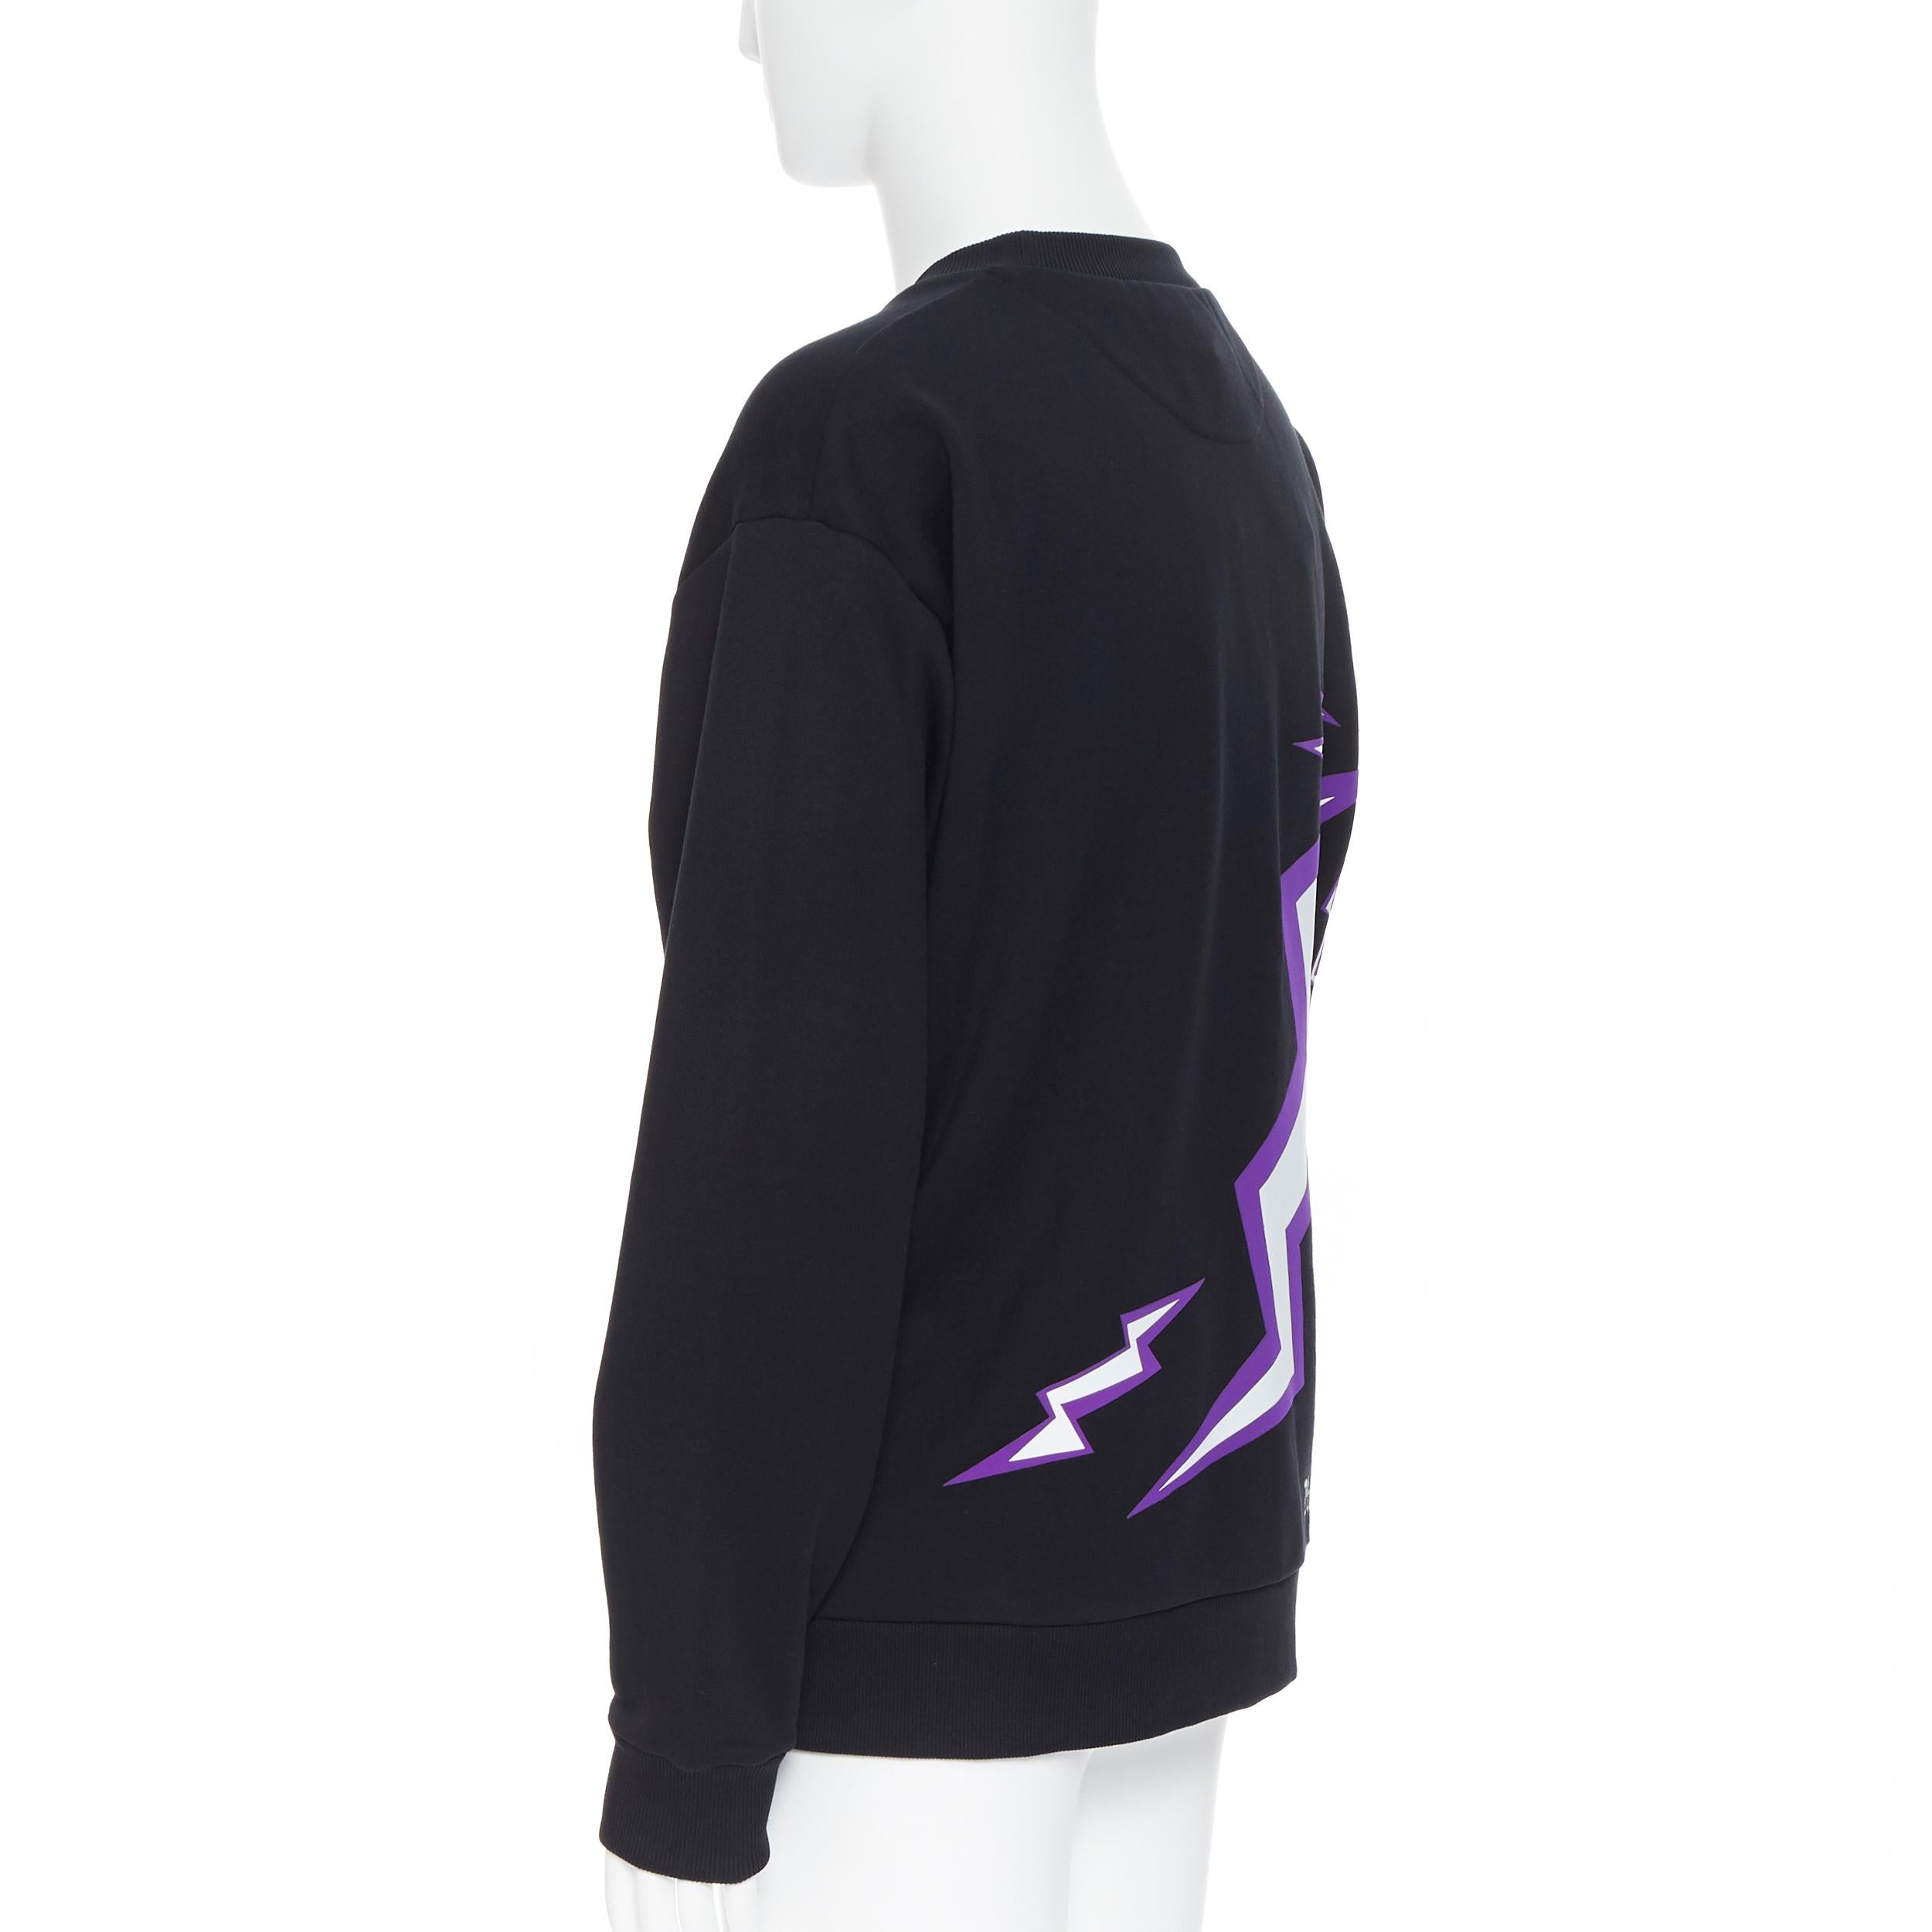 Black new PRADA 2019 Frankenstein Thunder Lightning Bolt black sweatshirt sweater XL